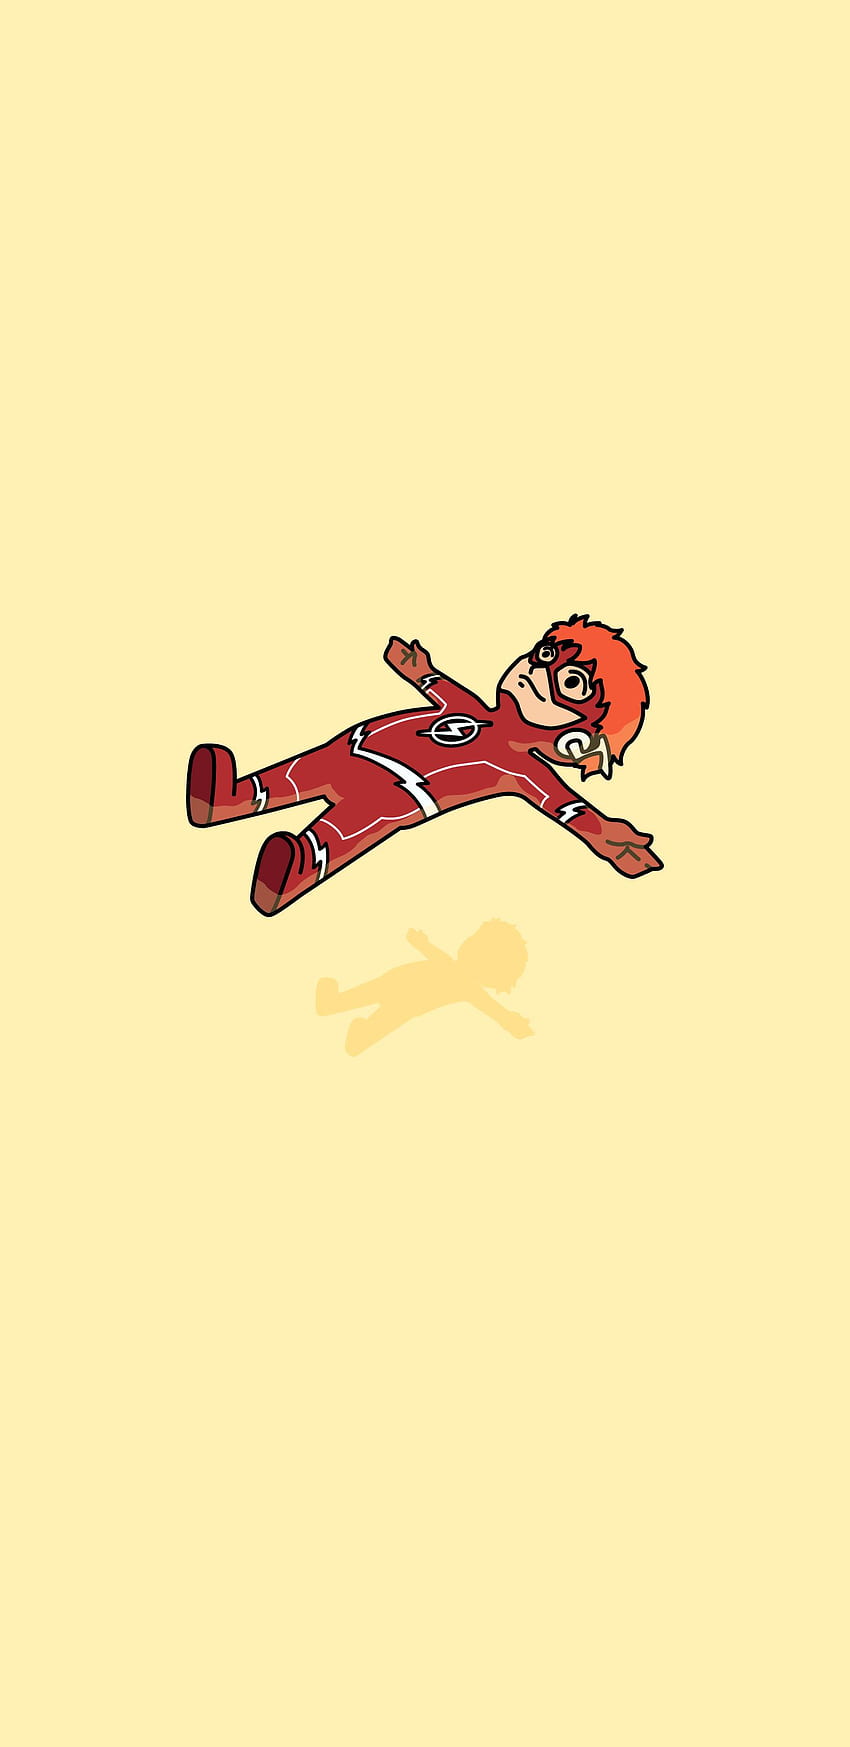 Fan Art Telepon Wally West Flash Just Chillin. (Dibuat Oleh Saudaraku yang Sangat Berbakat): DCcomics, Wally West Rebirth wallpaper ponsel HD